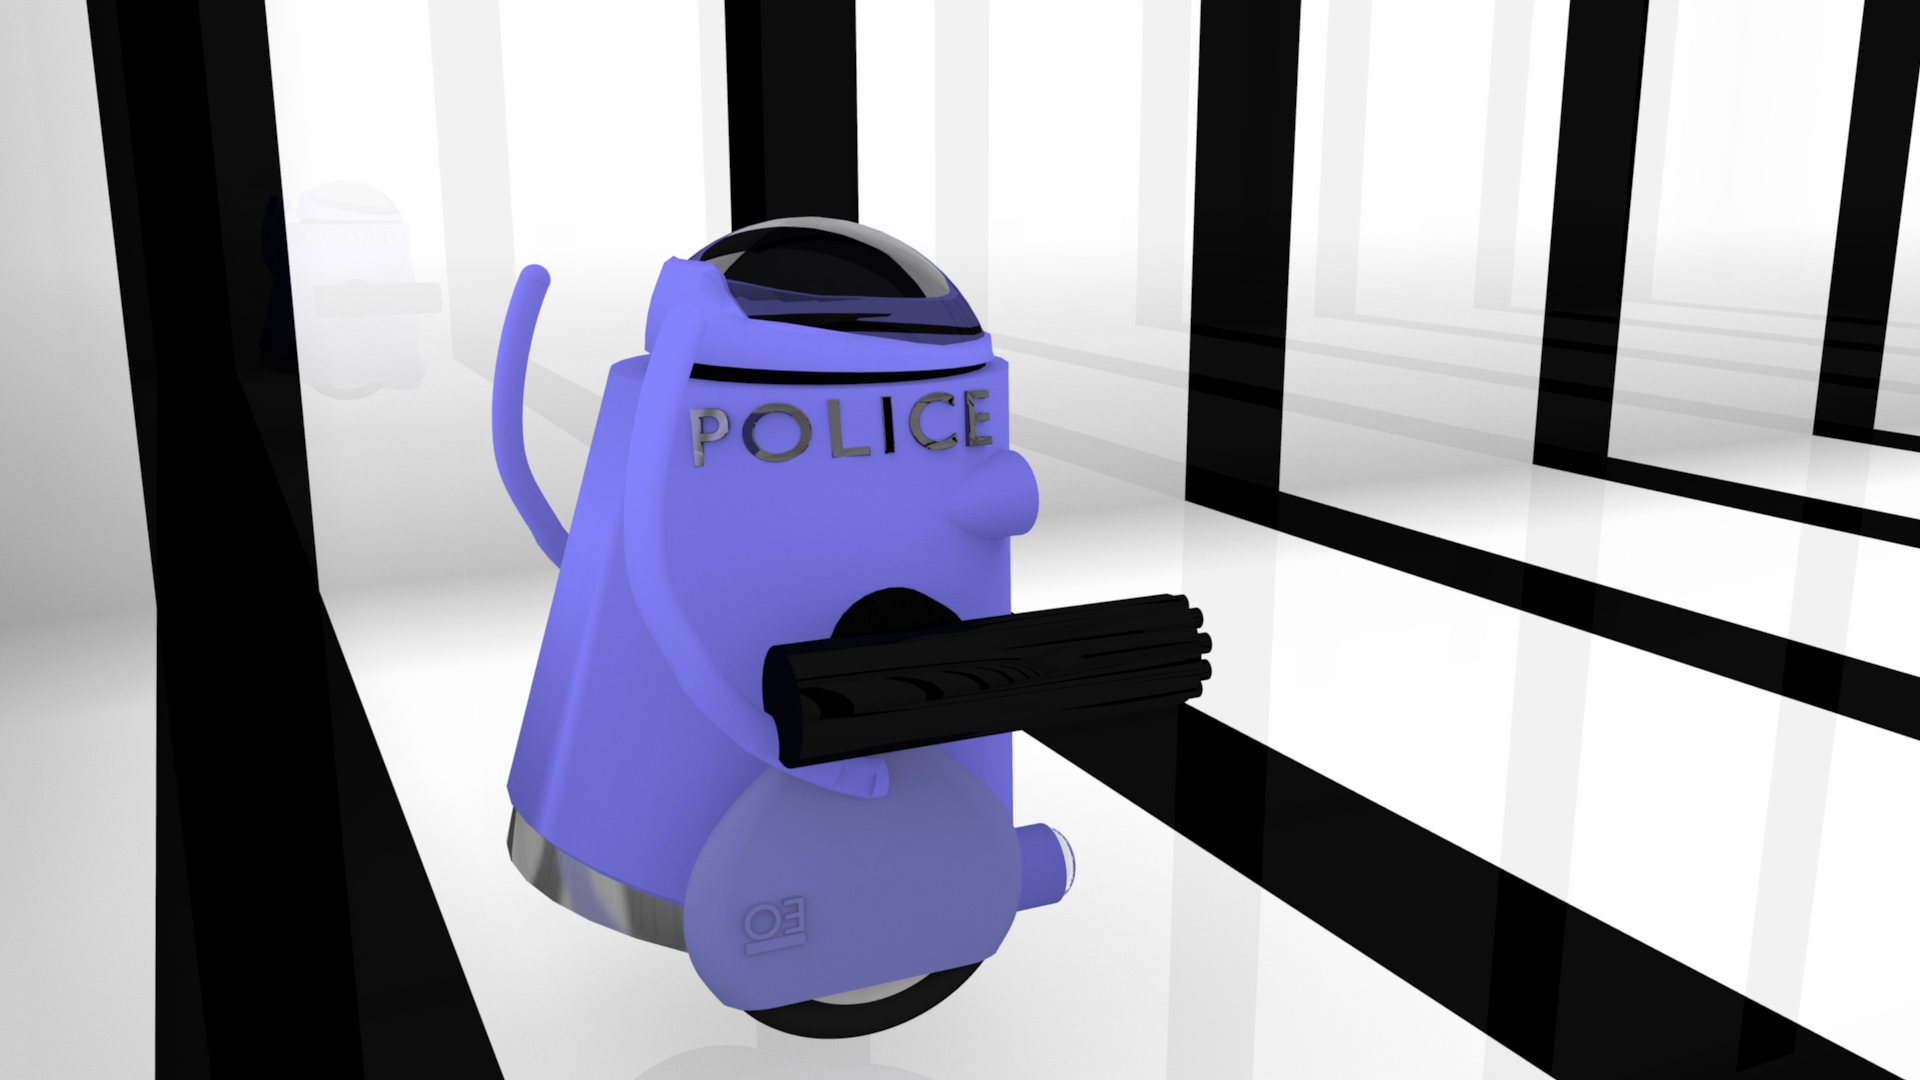 RobotPolice.jpg